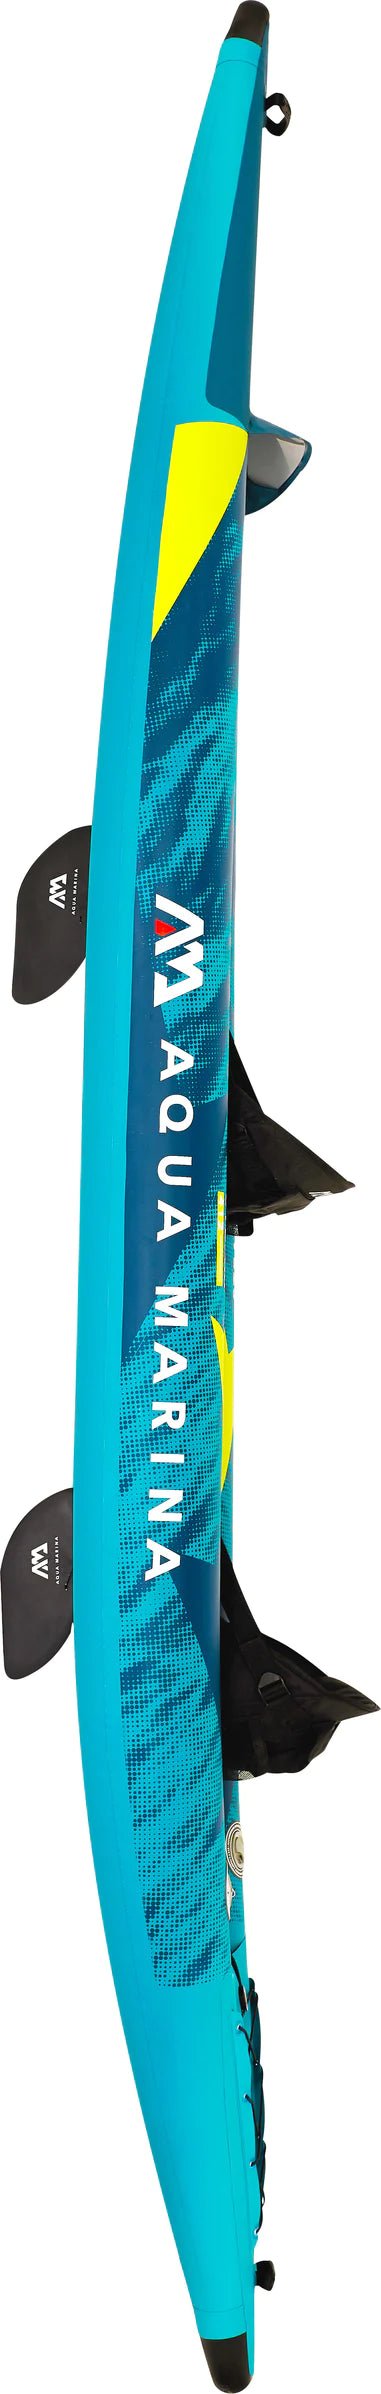 Aqua Marina STEAM 13'6" - Fire Pit Oasis